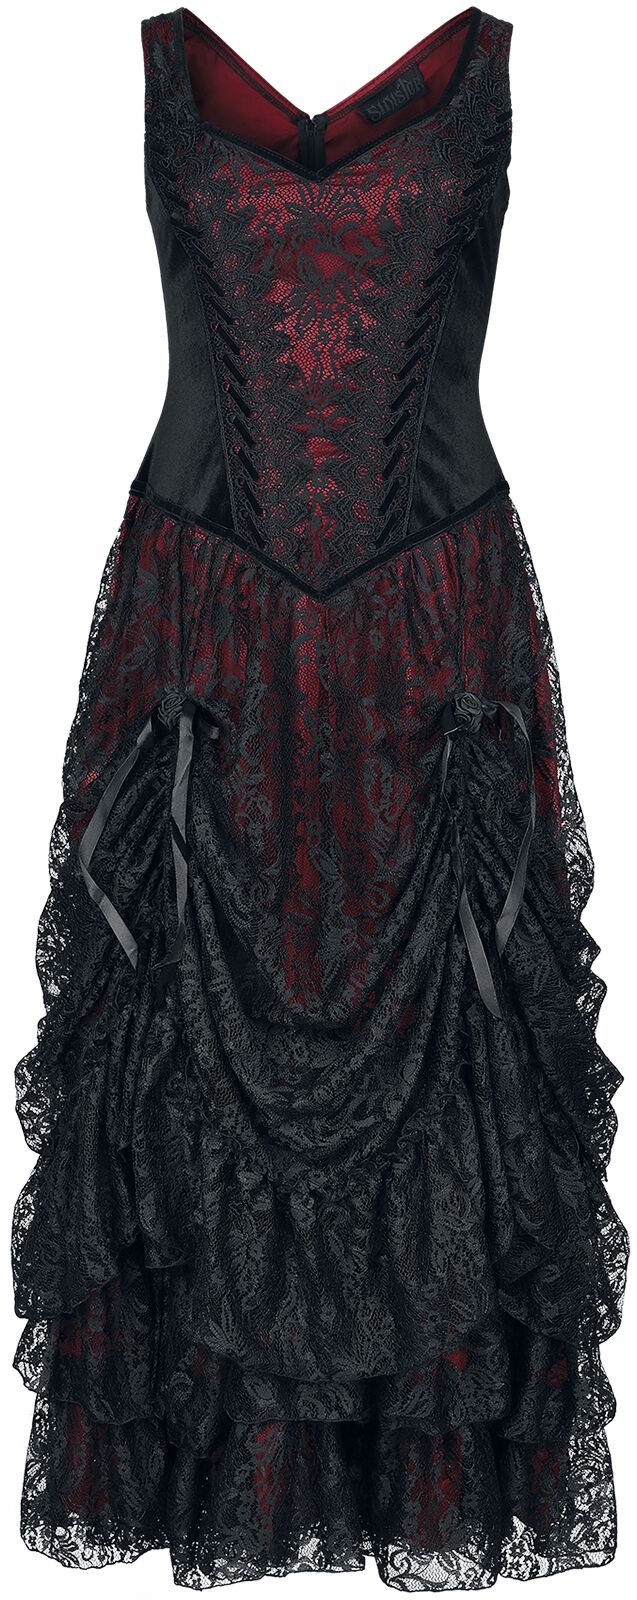 Sinister Gothic Longdress Langes Kleid schwarz rot in XL